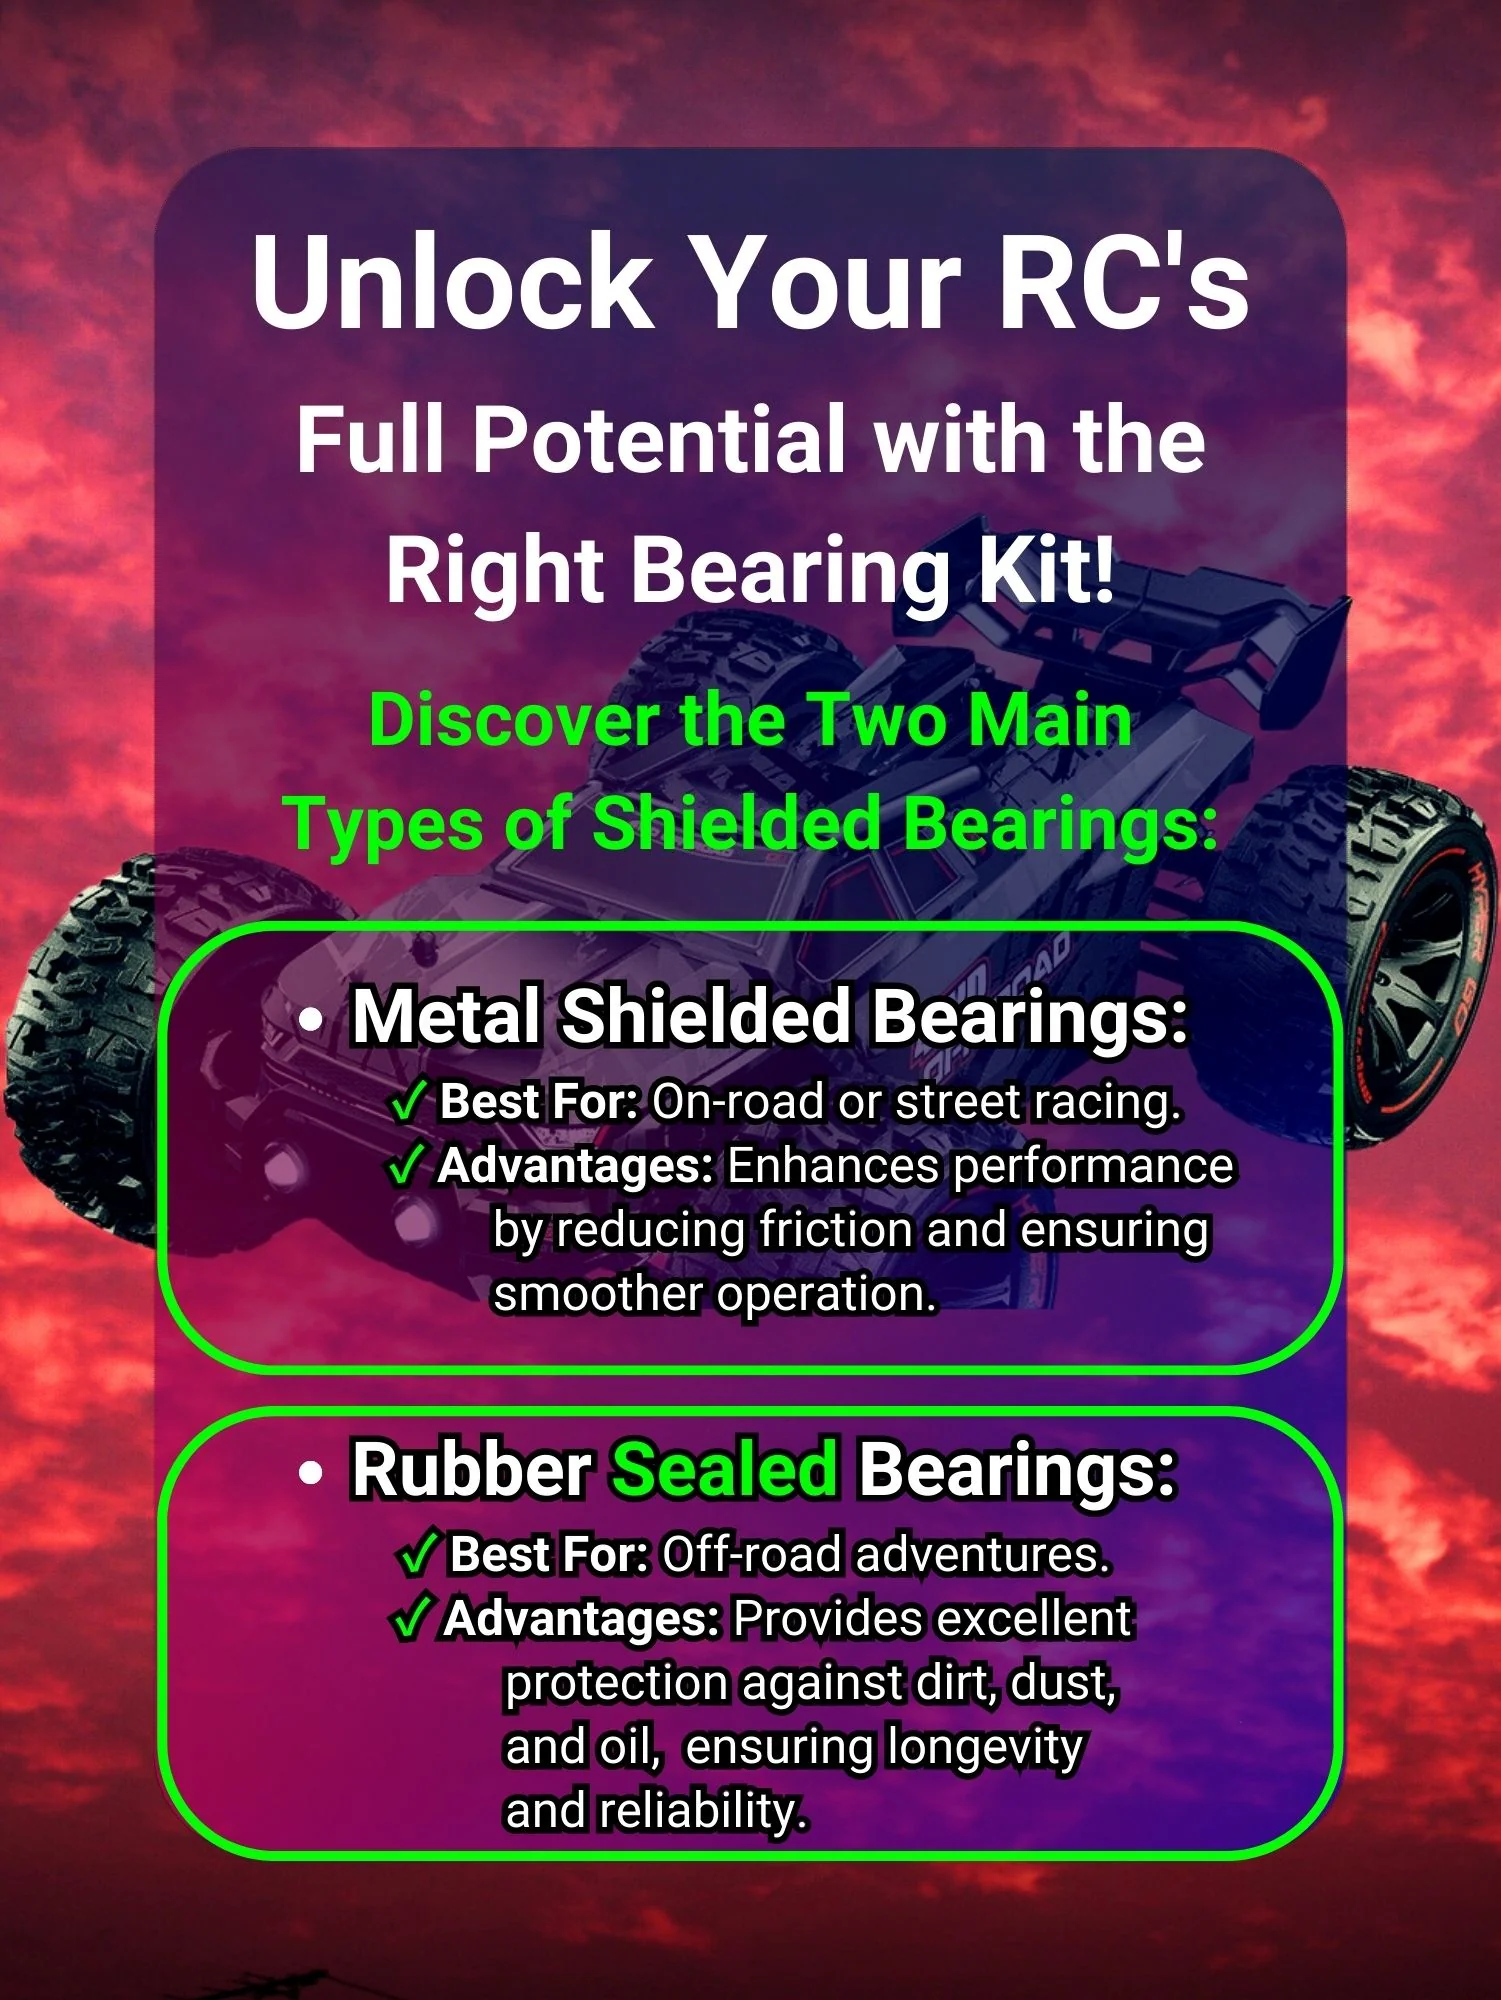 RCScrewZ Metal Shielded Bearing Kit swz011b for SWORKz Fox 4x4 1/10th #940001 - Picture 2 of 12